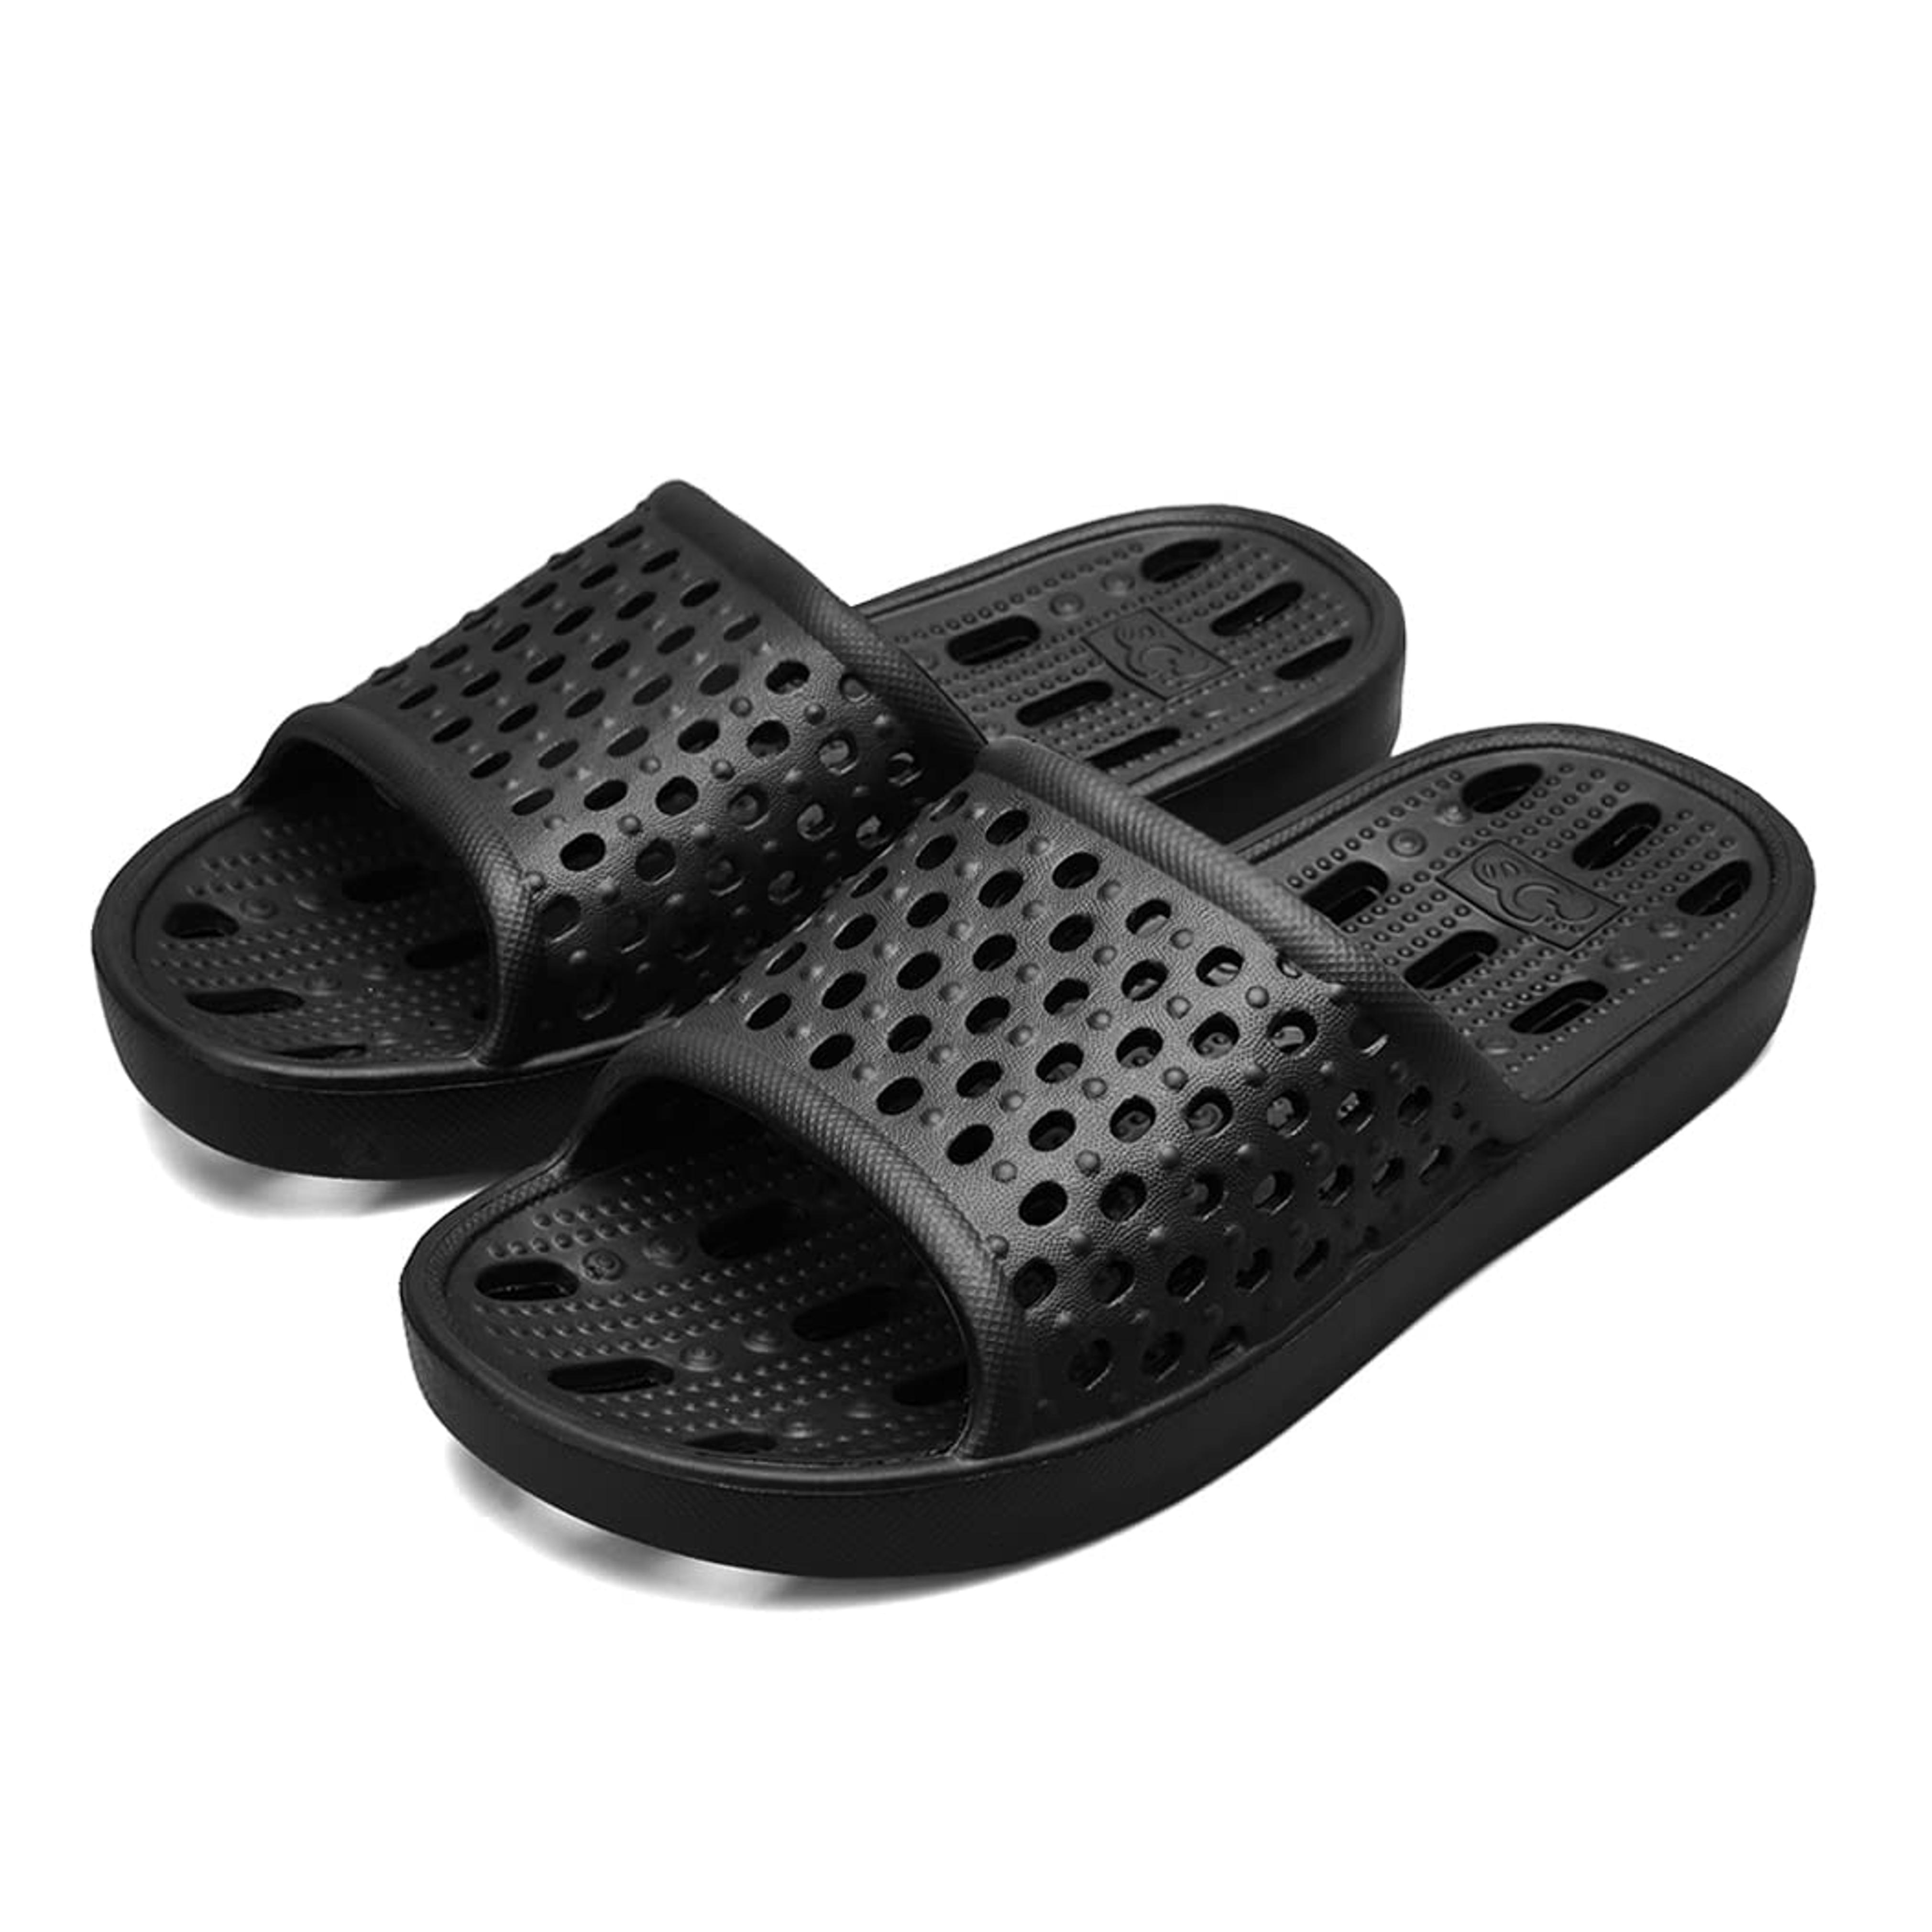 Amazon.com | Xomiboe Shower Shoes Quick Drying Non-Slip Comfortable Men Women House Slippers | Slippers